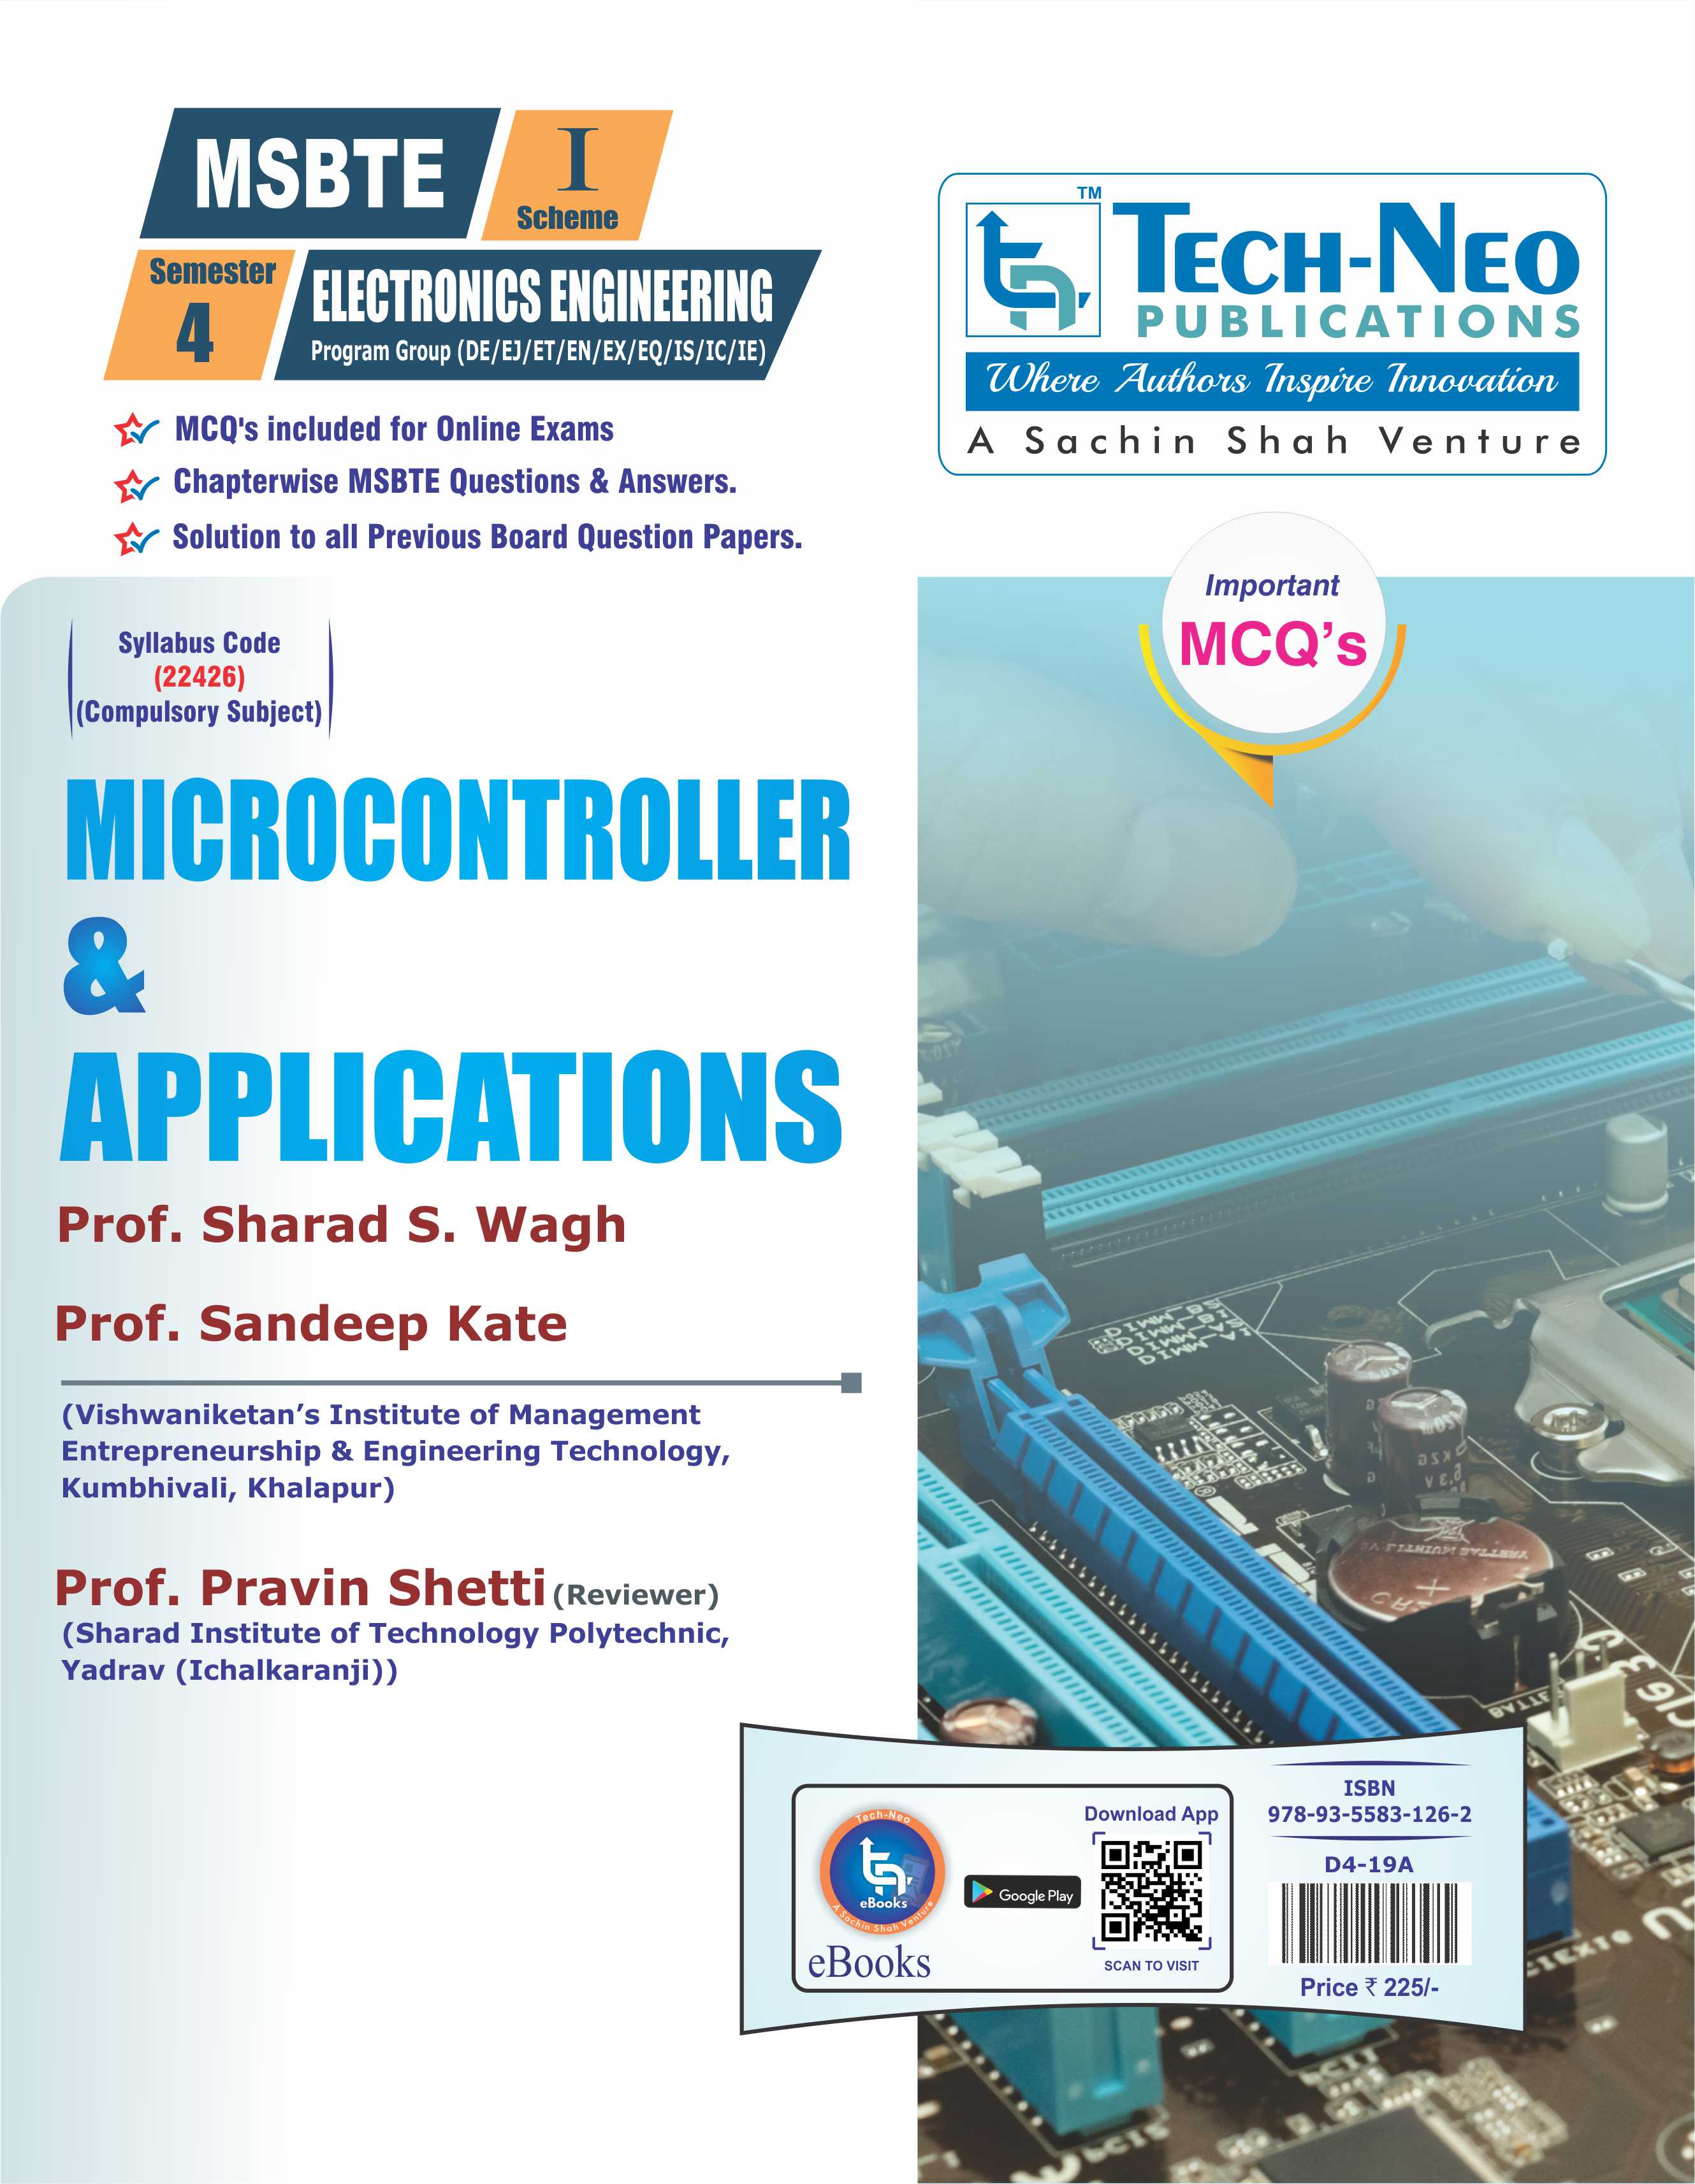 Microcontroller Applications